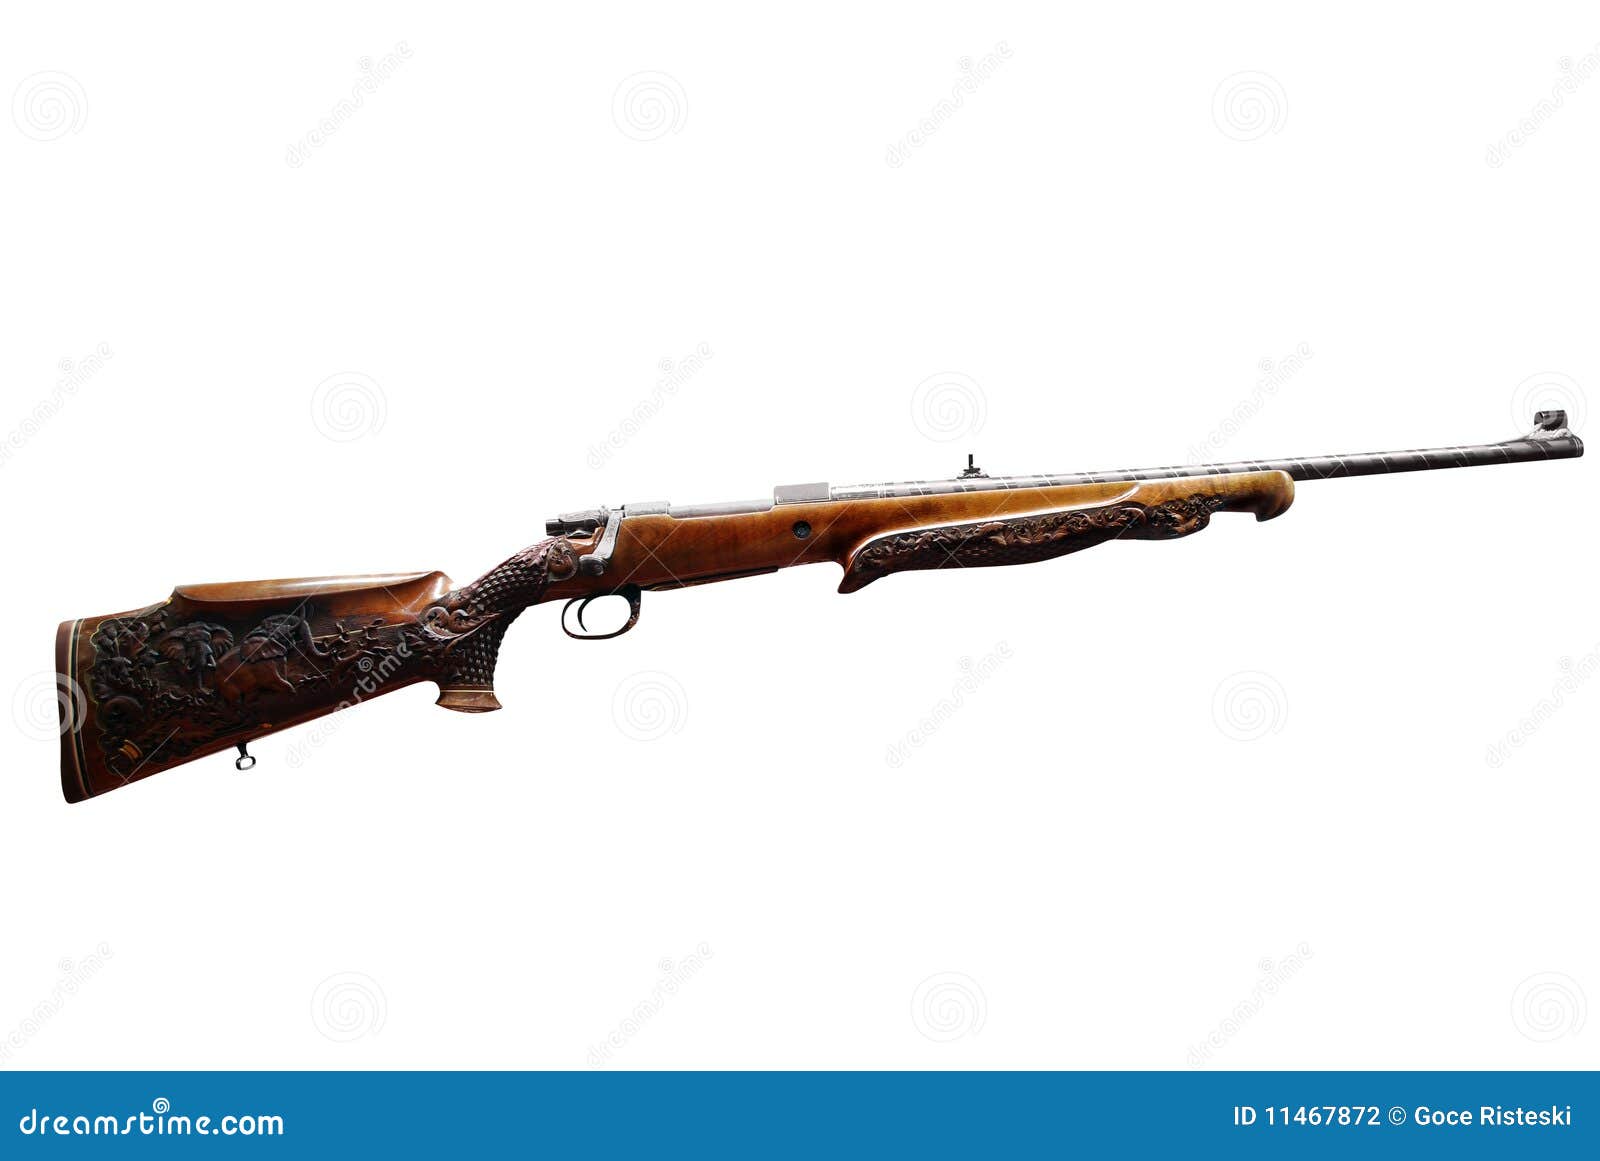 hunting carbine rifle